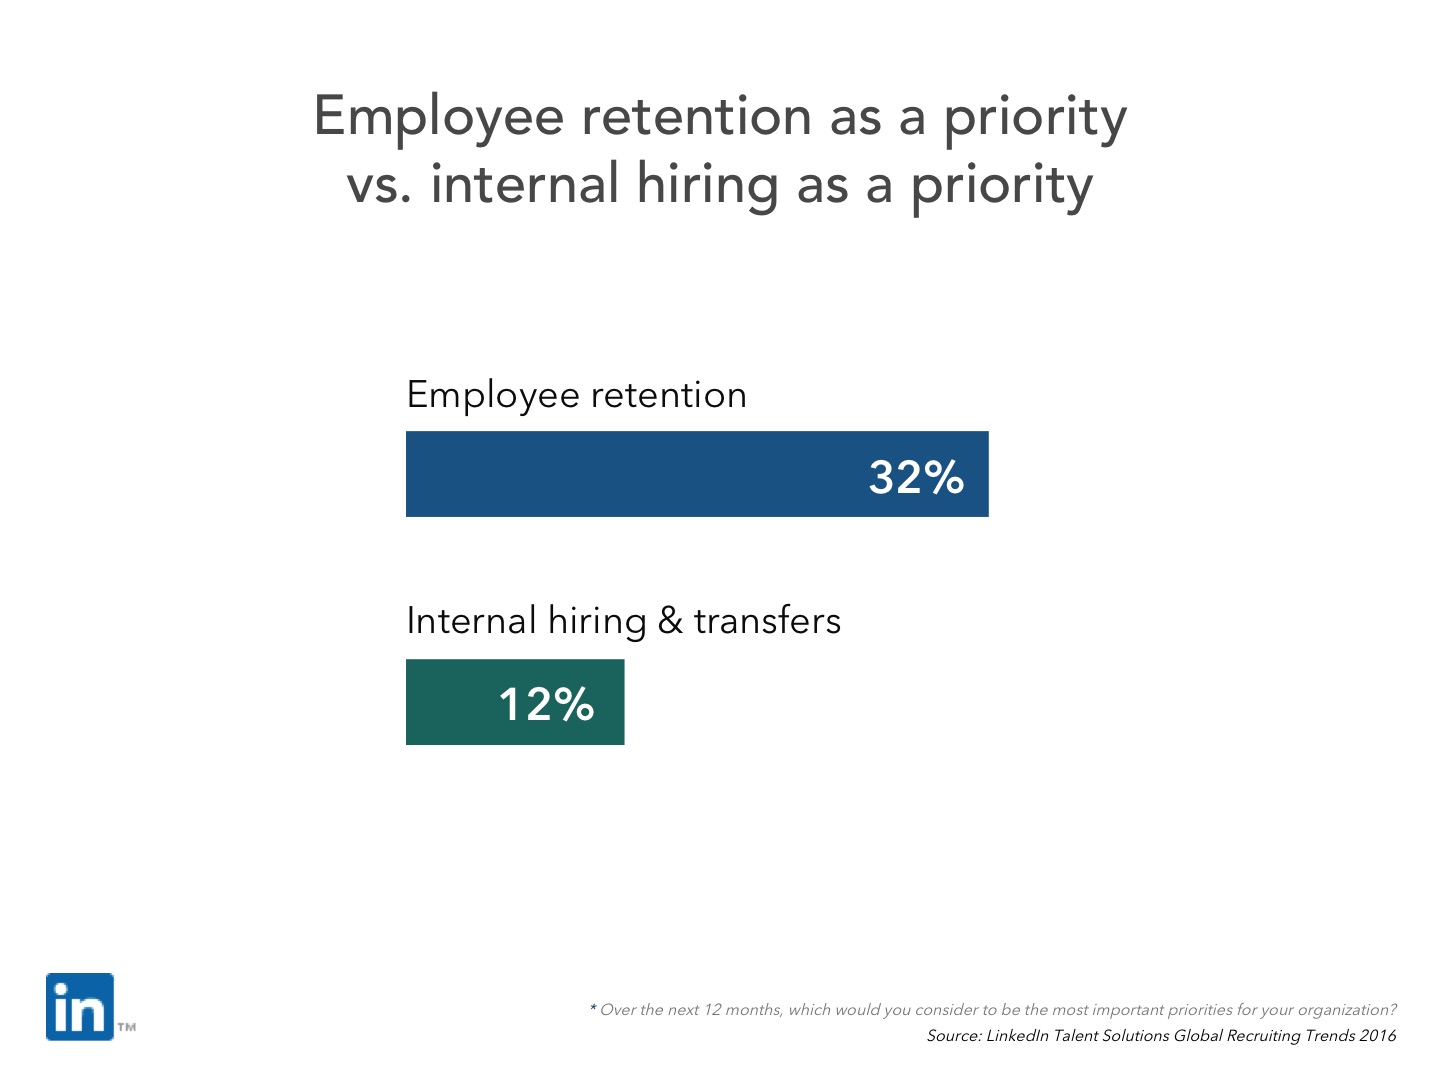 Employee retention and internal hiring